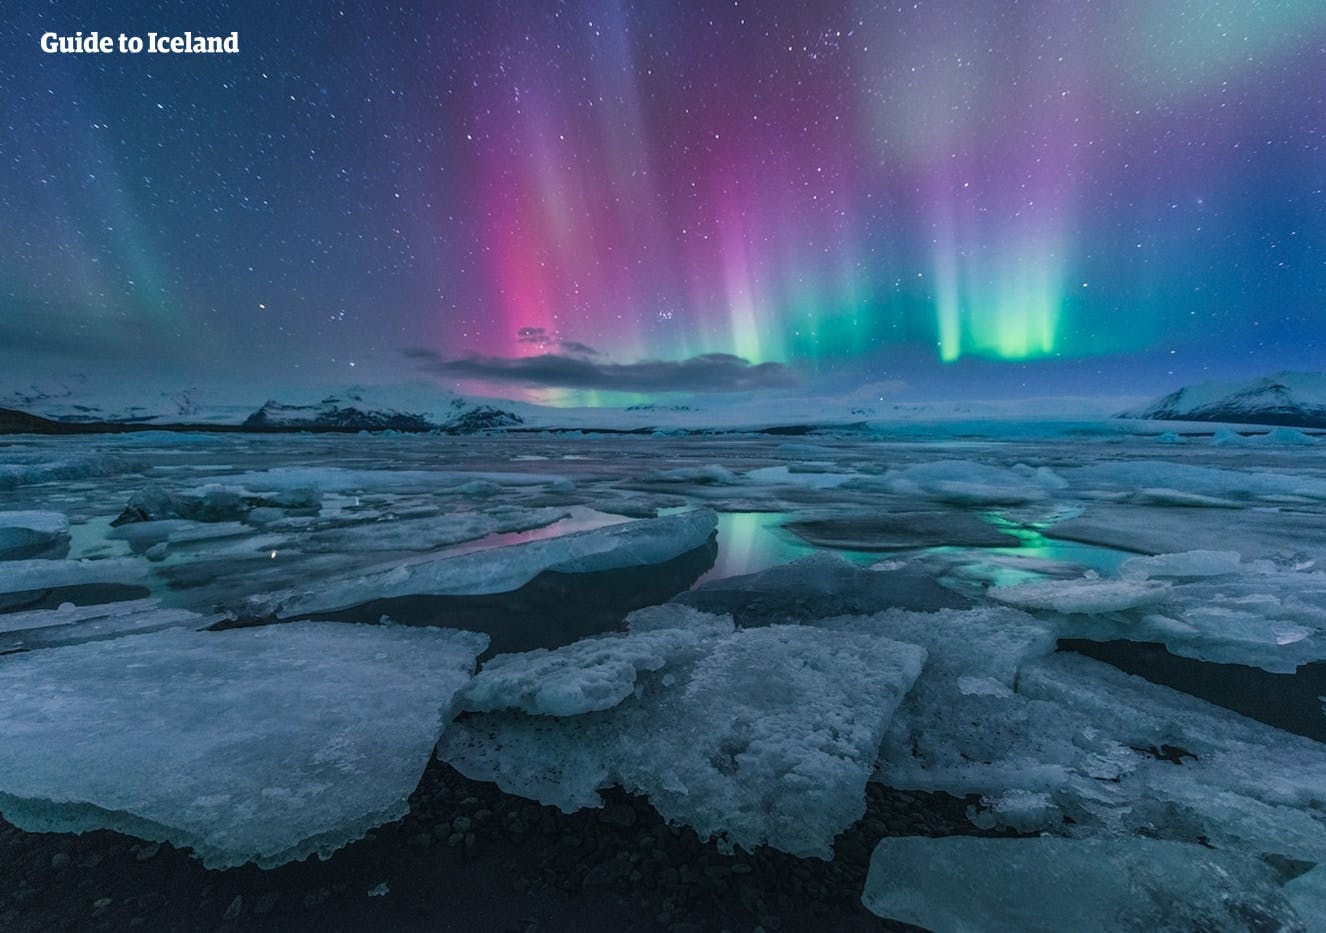 The beautiful Northern Lights dancing in the sky above Jökulsárlón glacier lagoon